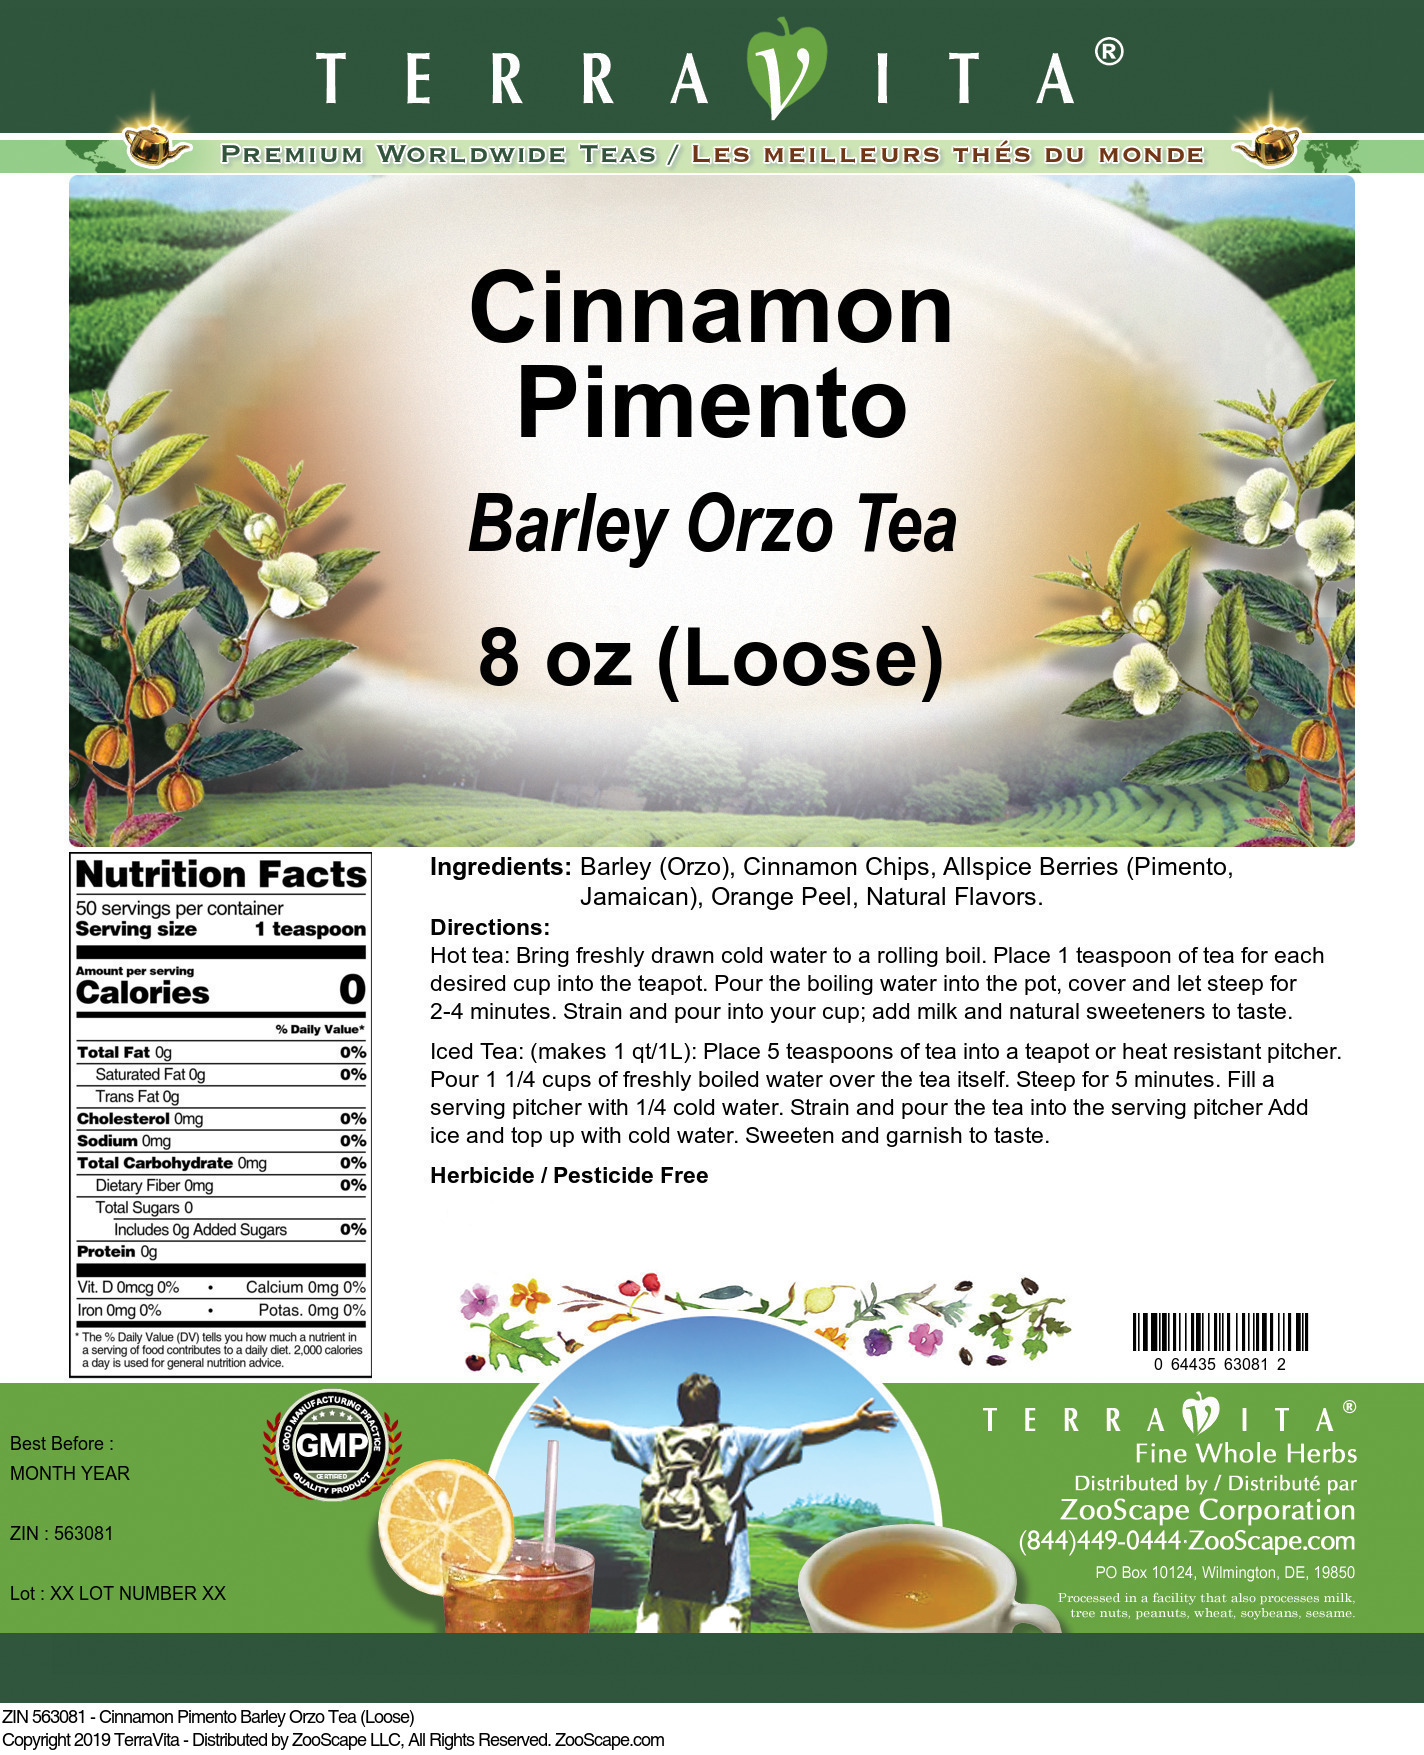 Cinnamon Pimento Barley Orzo Tea (Loose) - Label